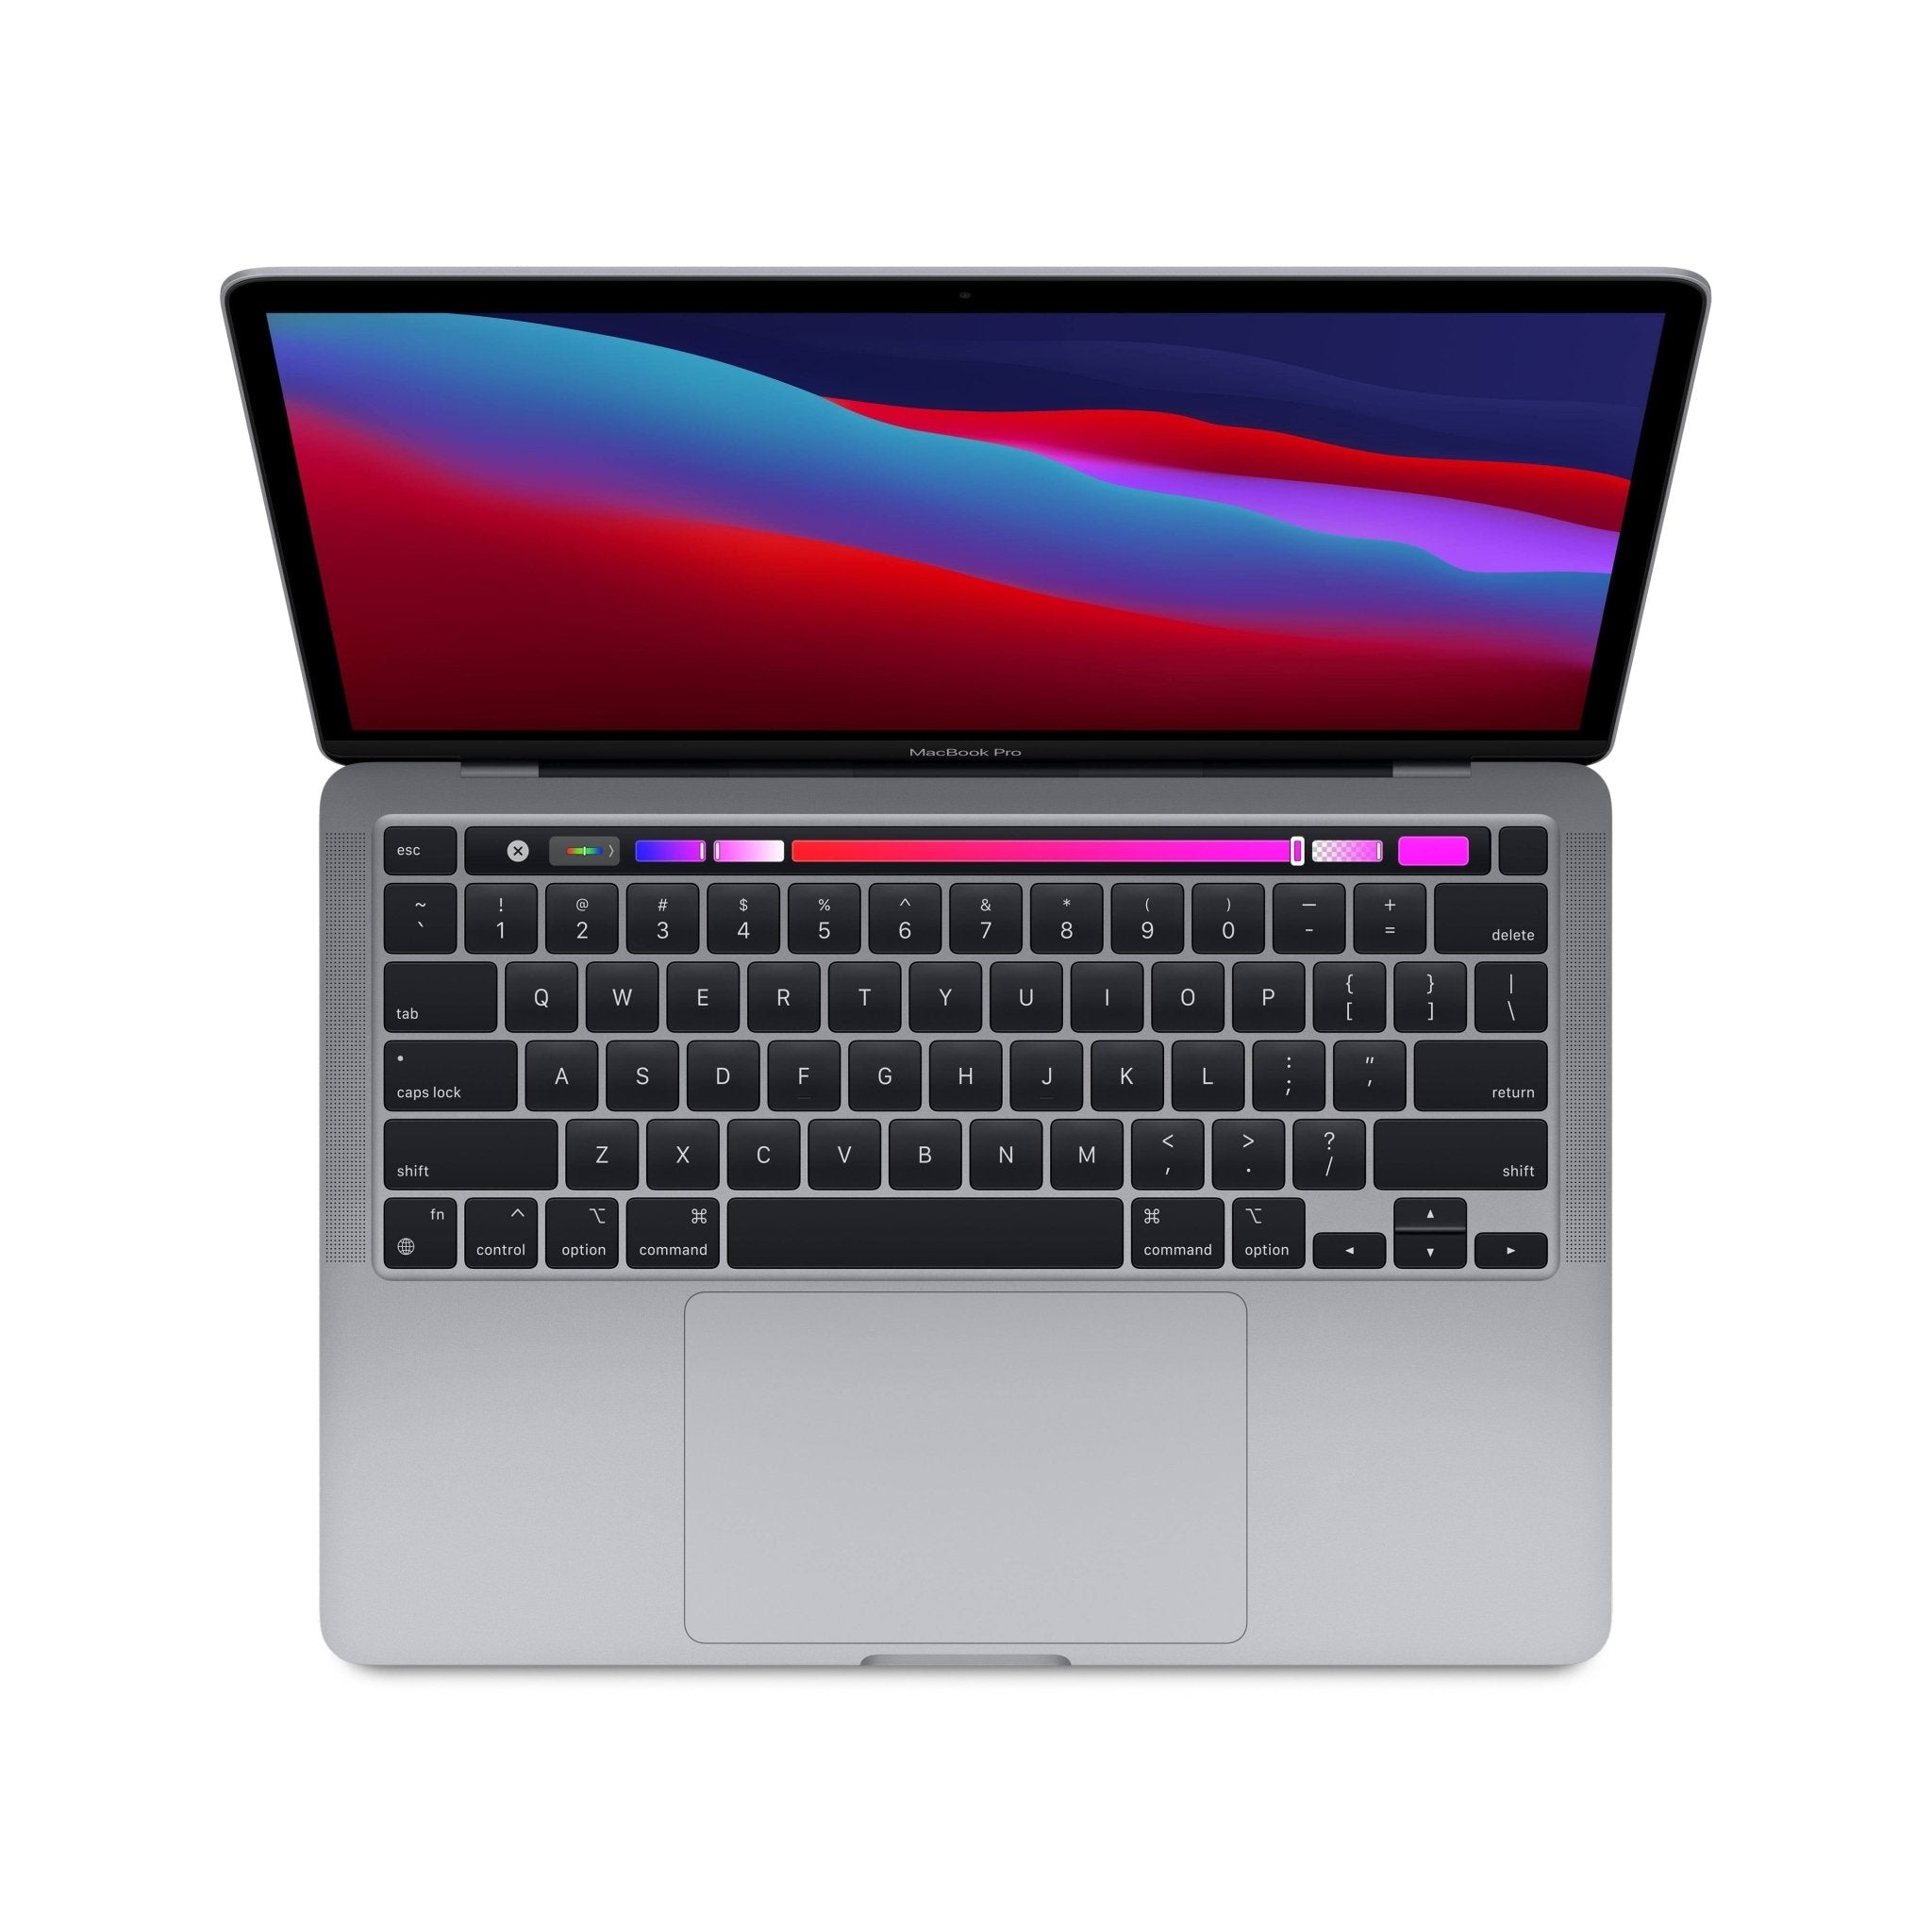 Apple MacBook Pro (13-inch) – Apple M1 Chip (2020)